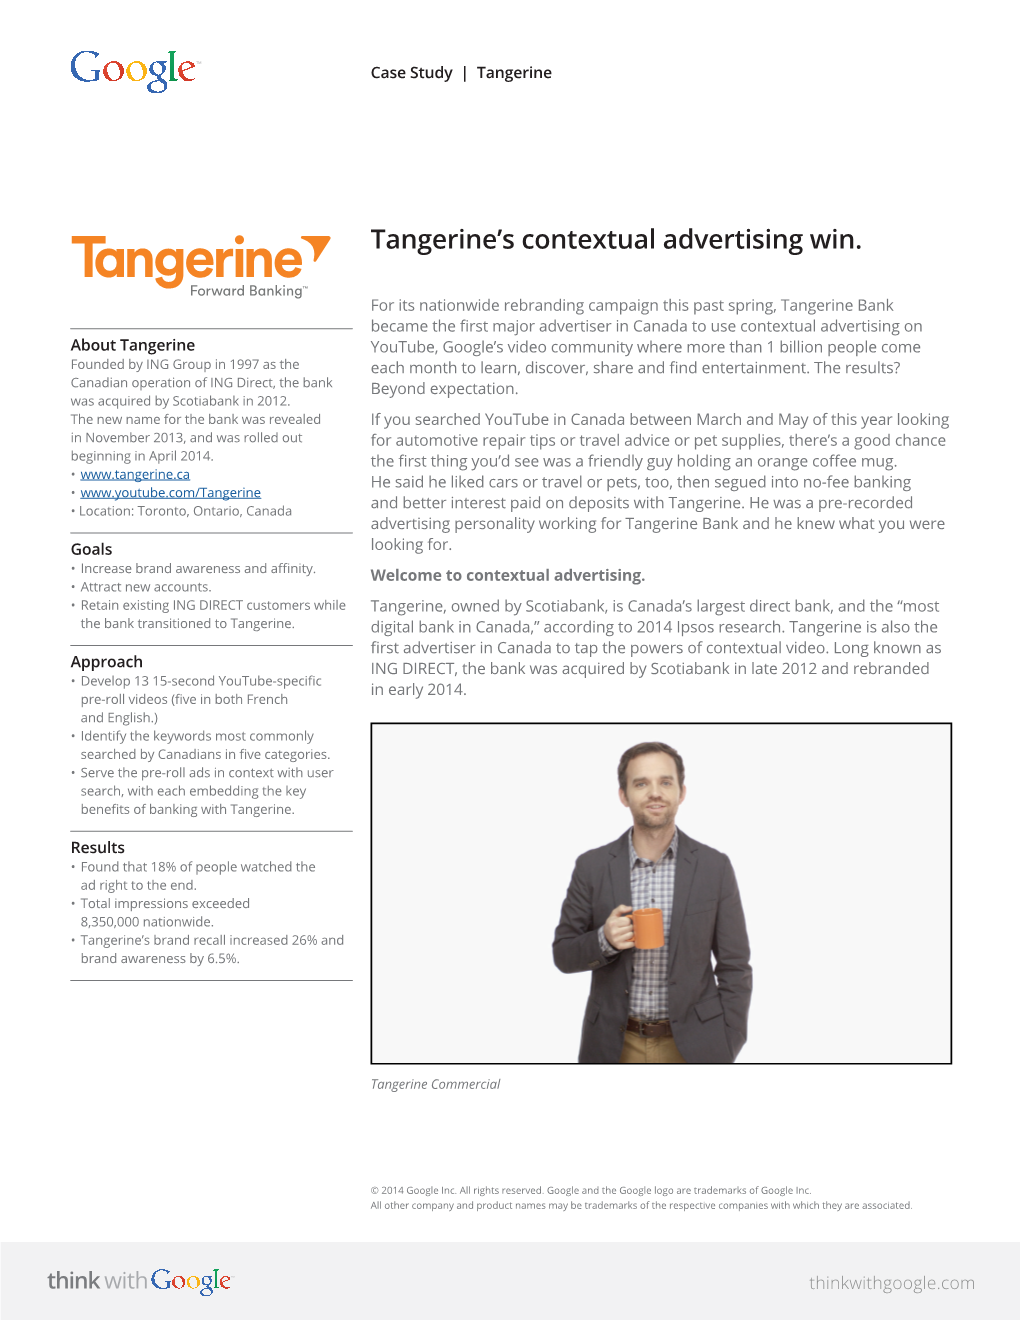 Tangerine's Contextual Advertising Win